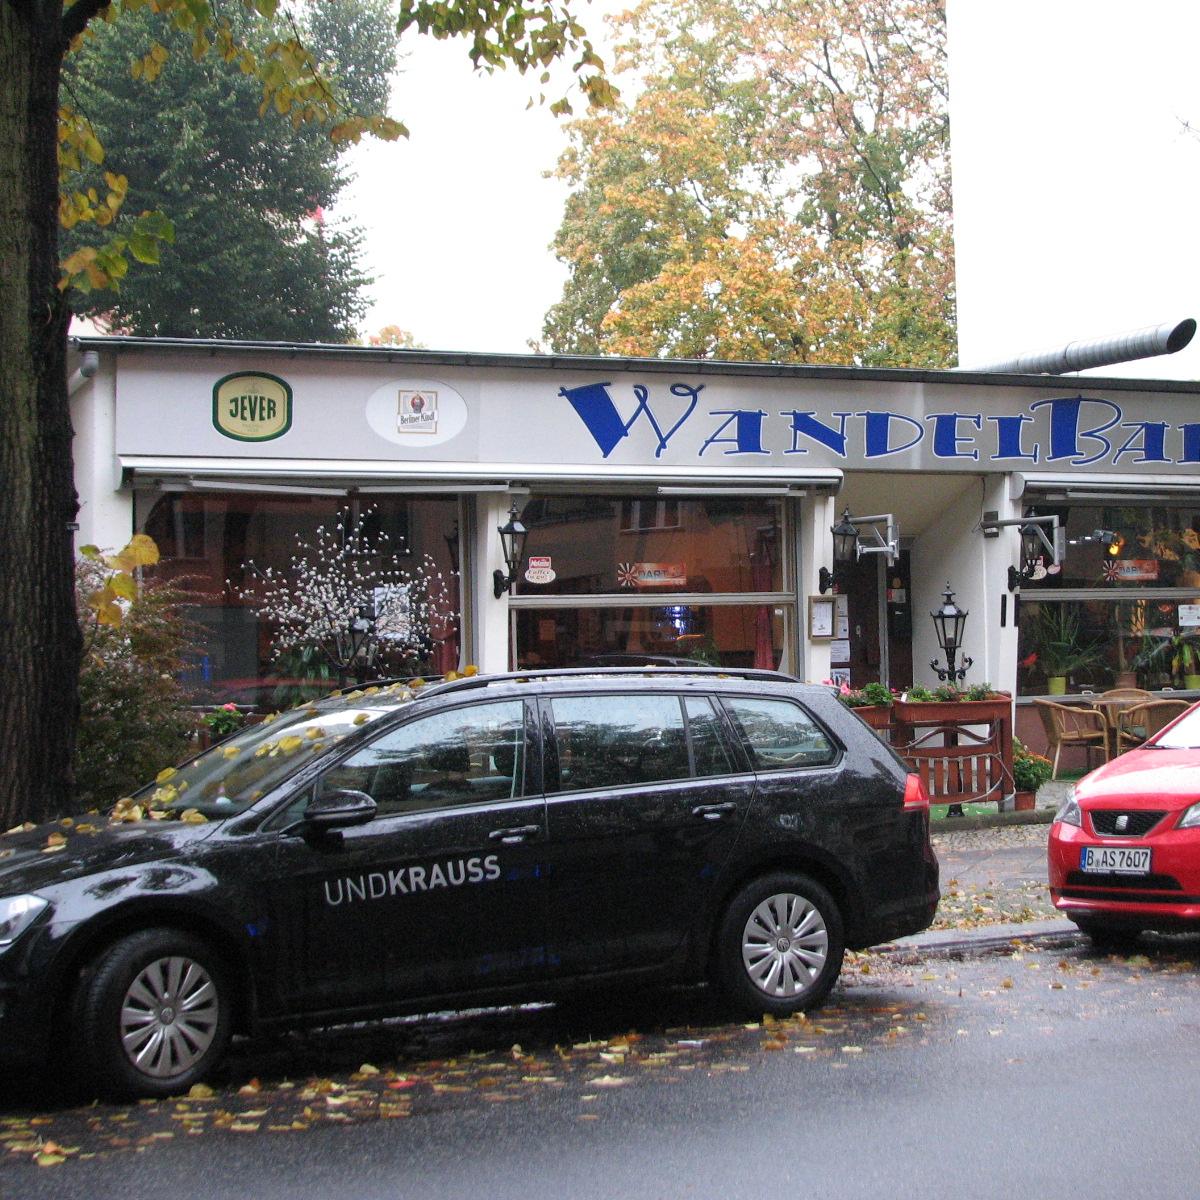 Restaurant "WandelBar" in Berlin